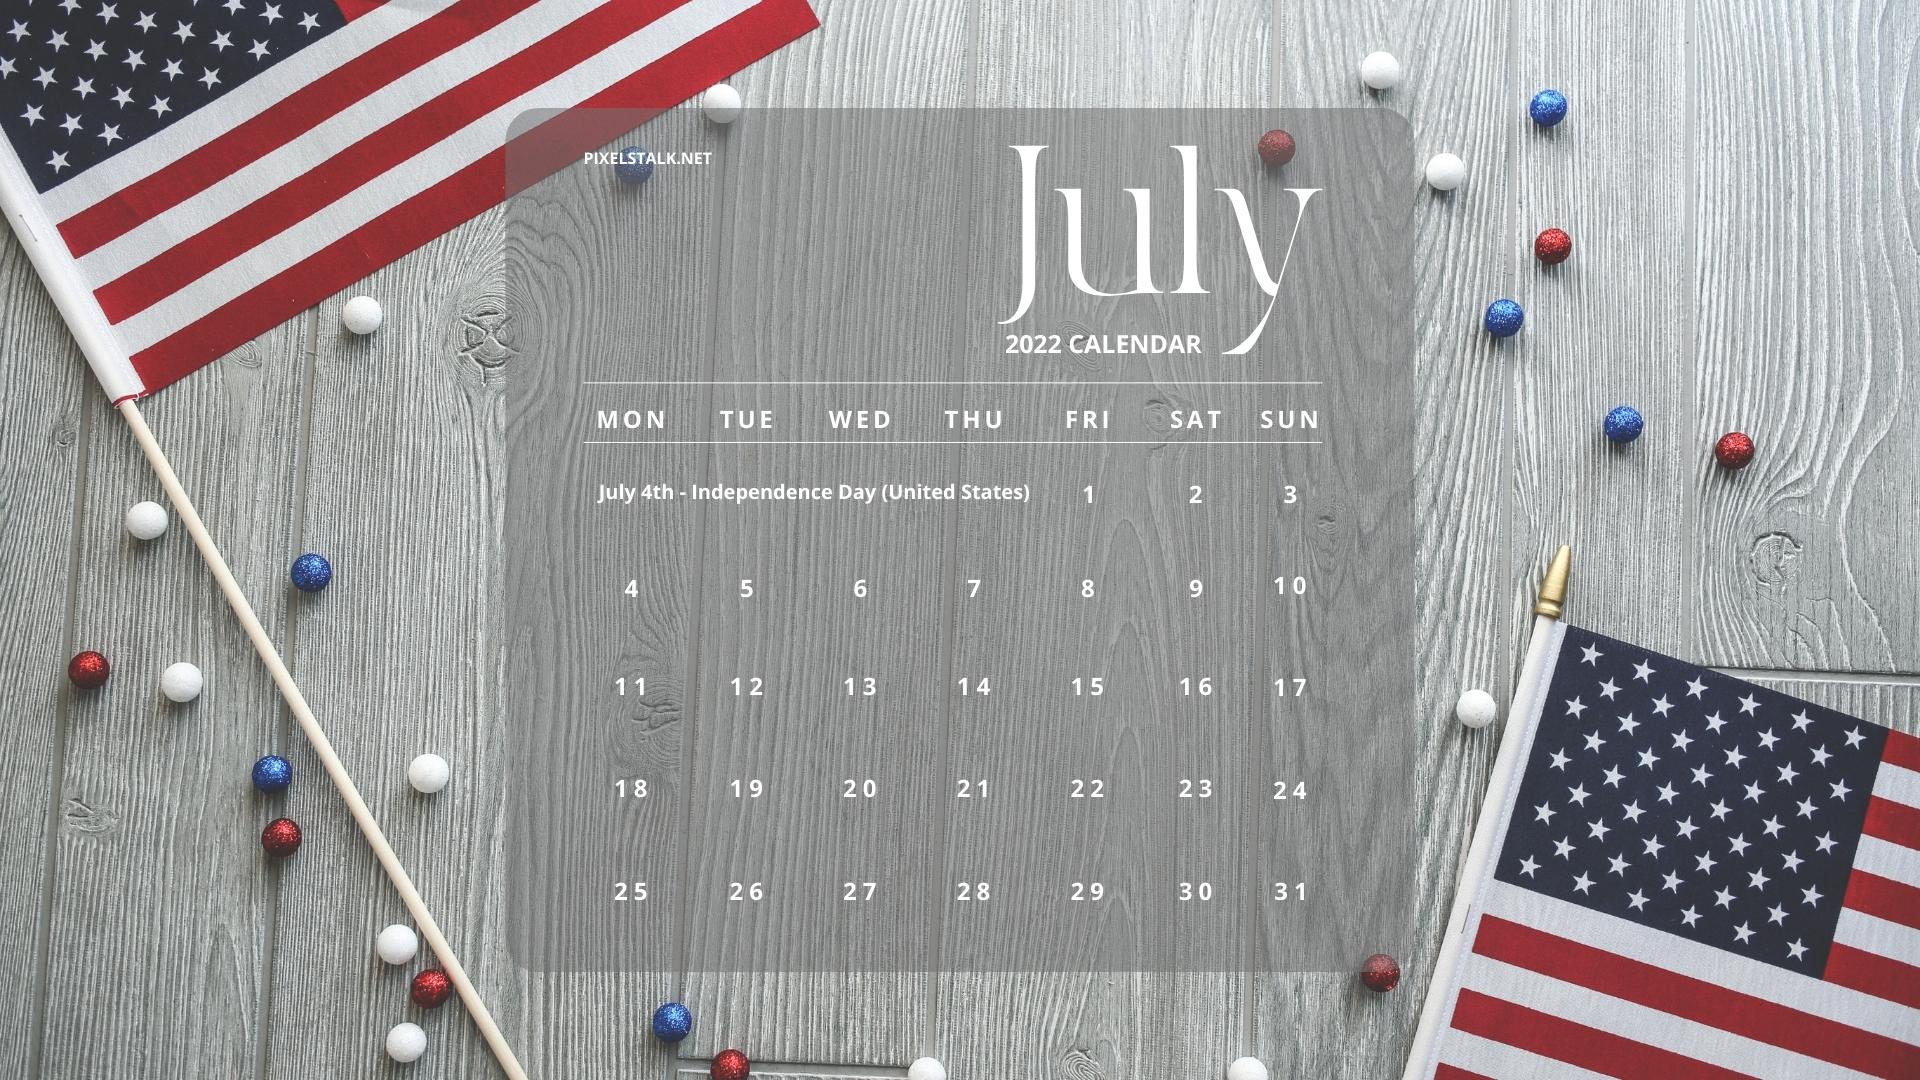 Free download July 2022 Calendar Wallpaper HD download [1920x1080] for your Desktop, Mobile & Tablet. Explore July 2022 Calendar Wallpaper. July Calendar Wallpaper, July 2019 Calendar Wallpaper, July 2018 Calendar Wallpaper